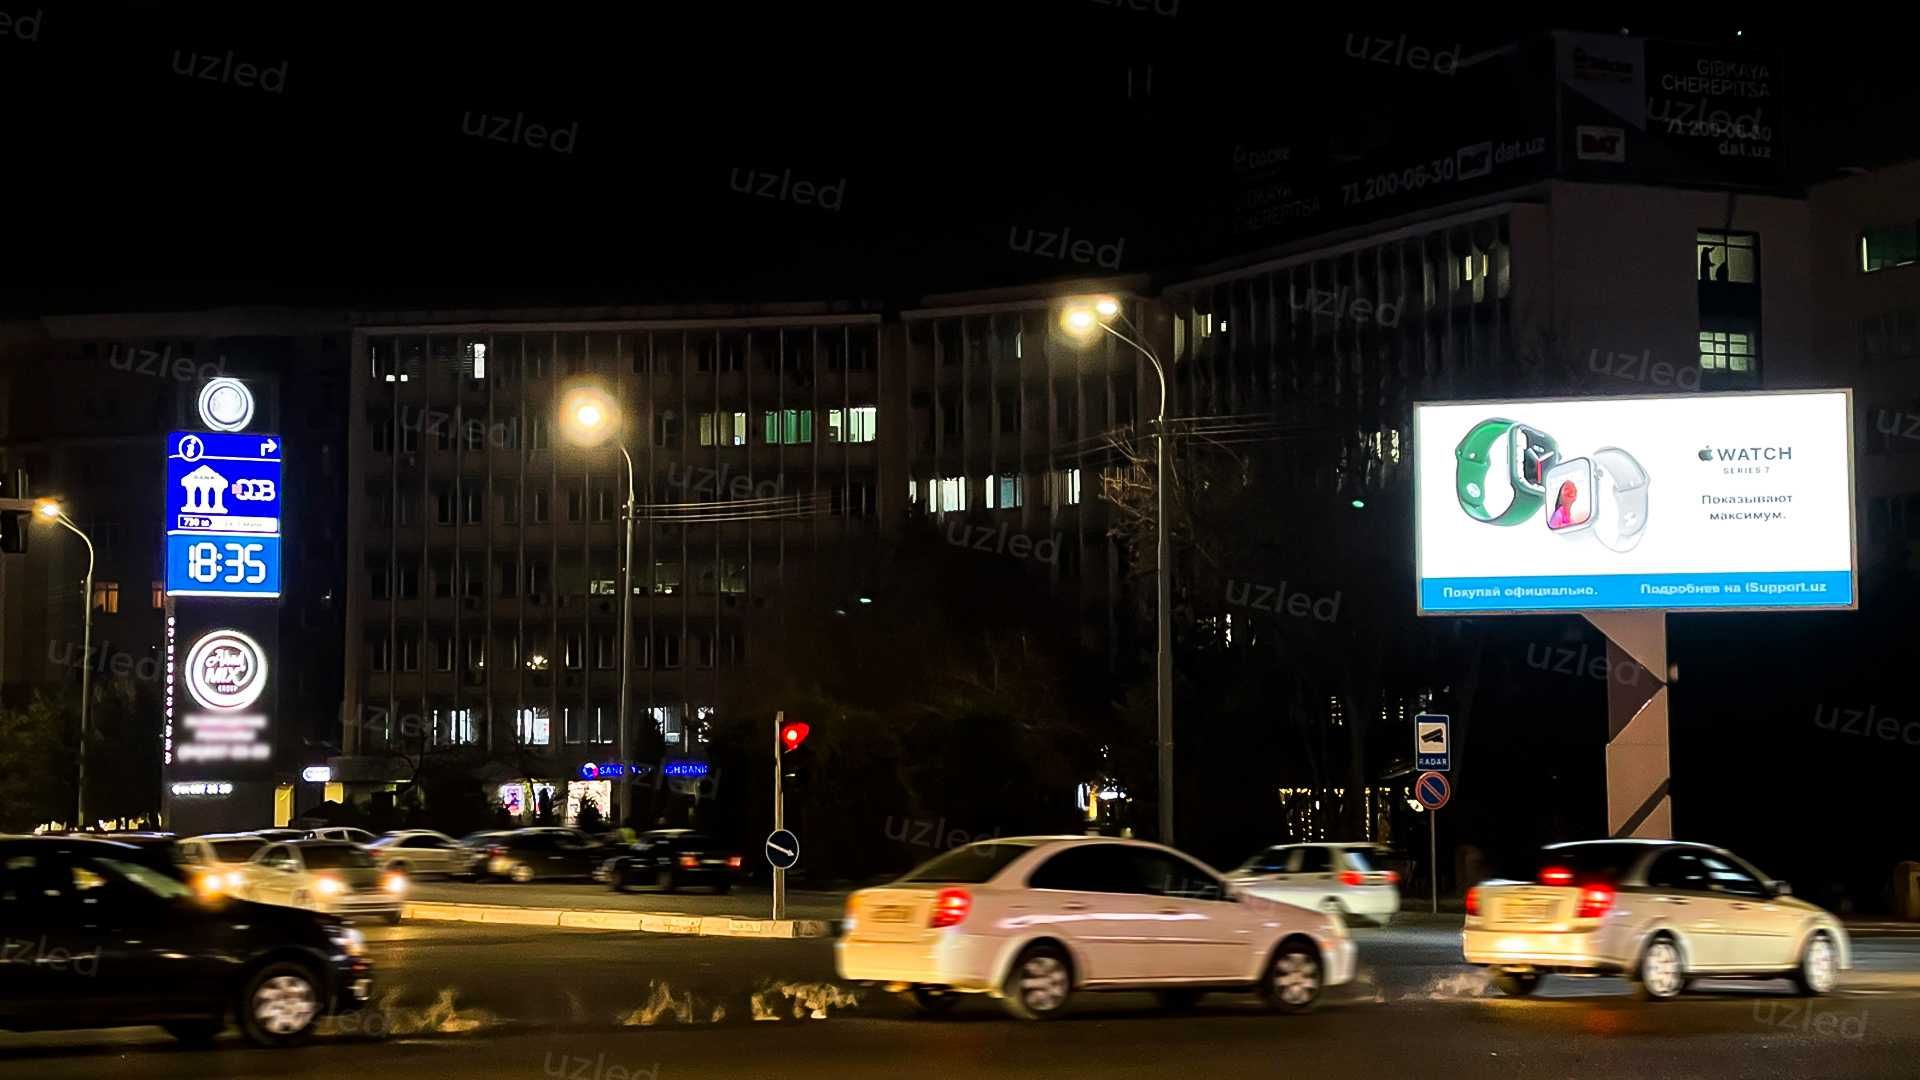 Led ekran Tashkent\LED экраны Ташкент\Баннер\Reklama